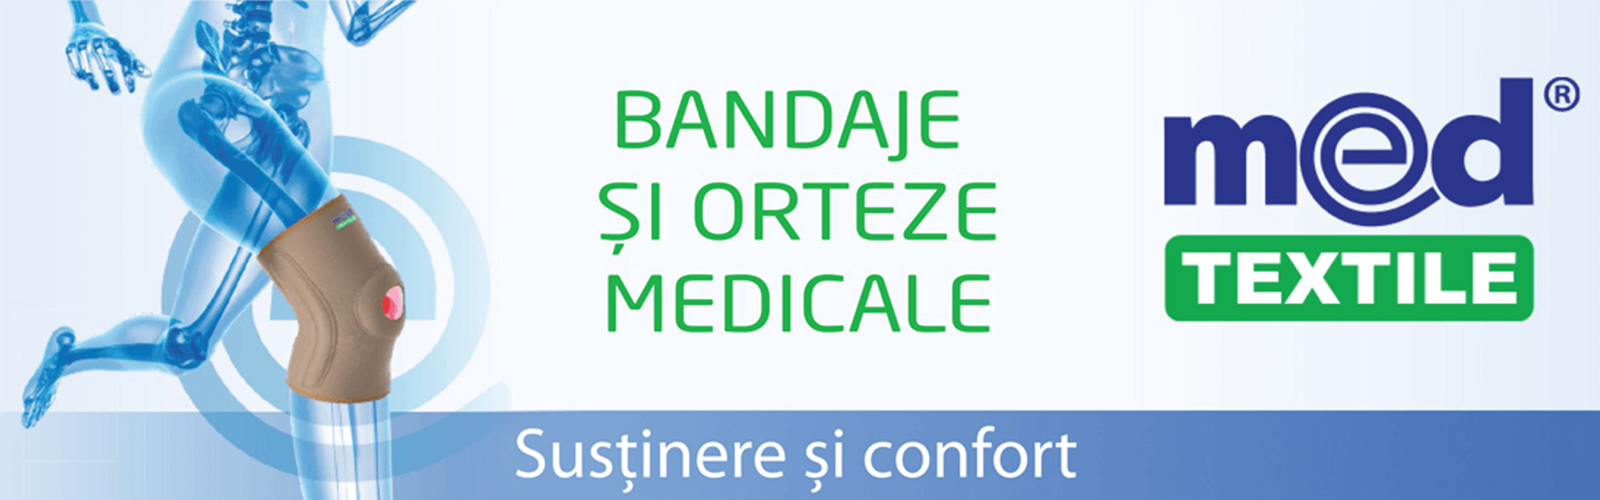 Banner Medtextile